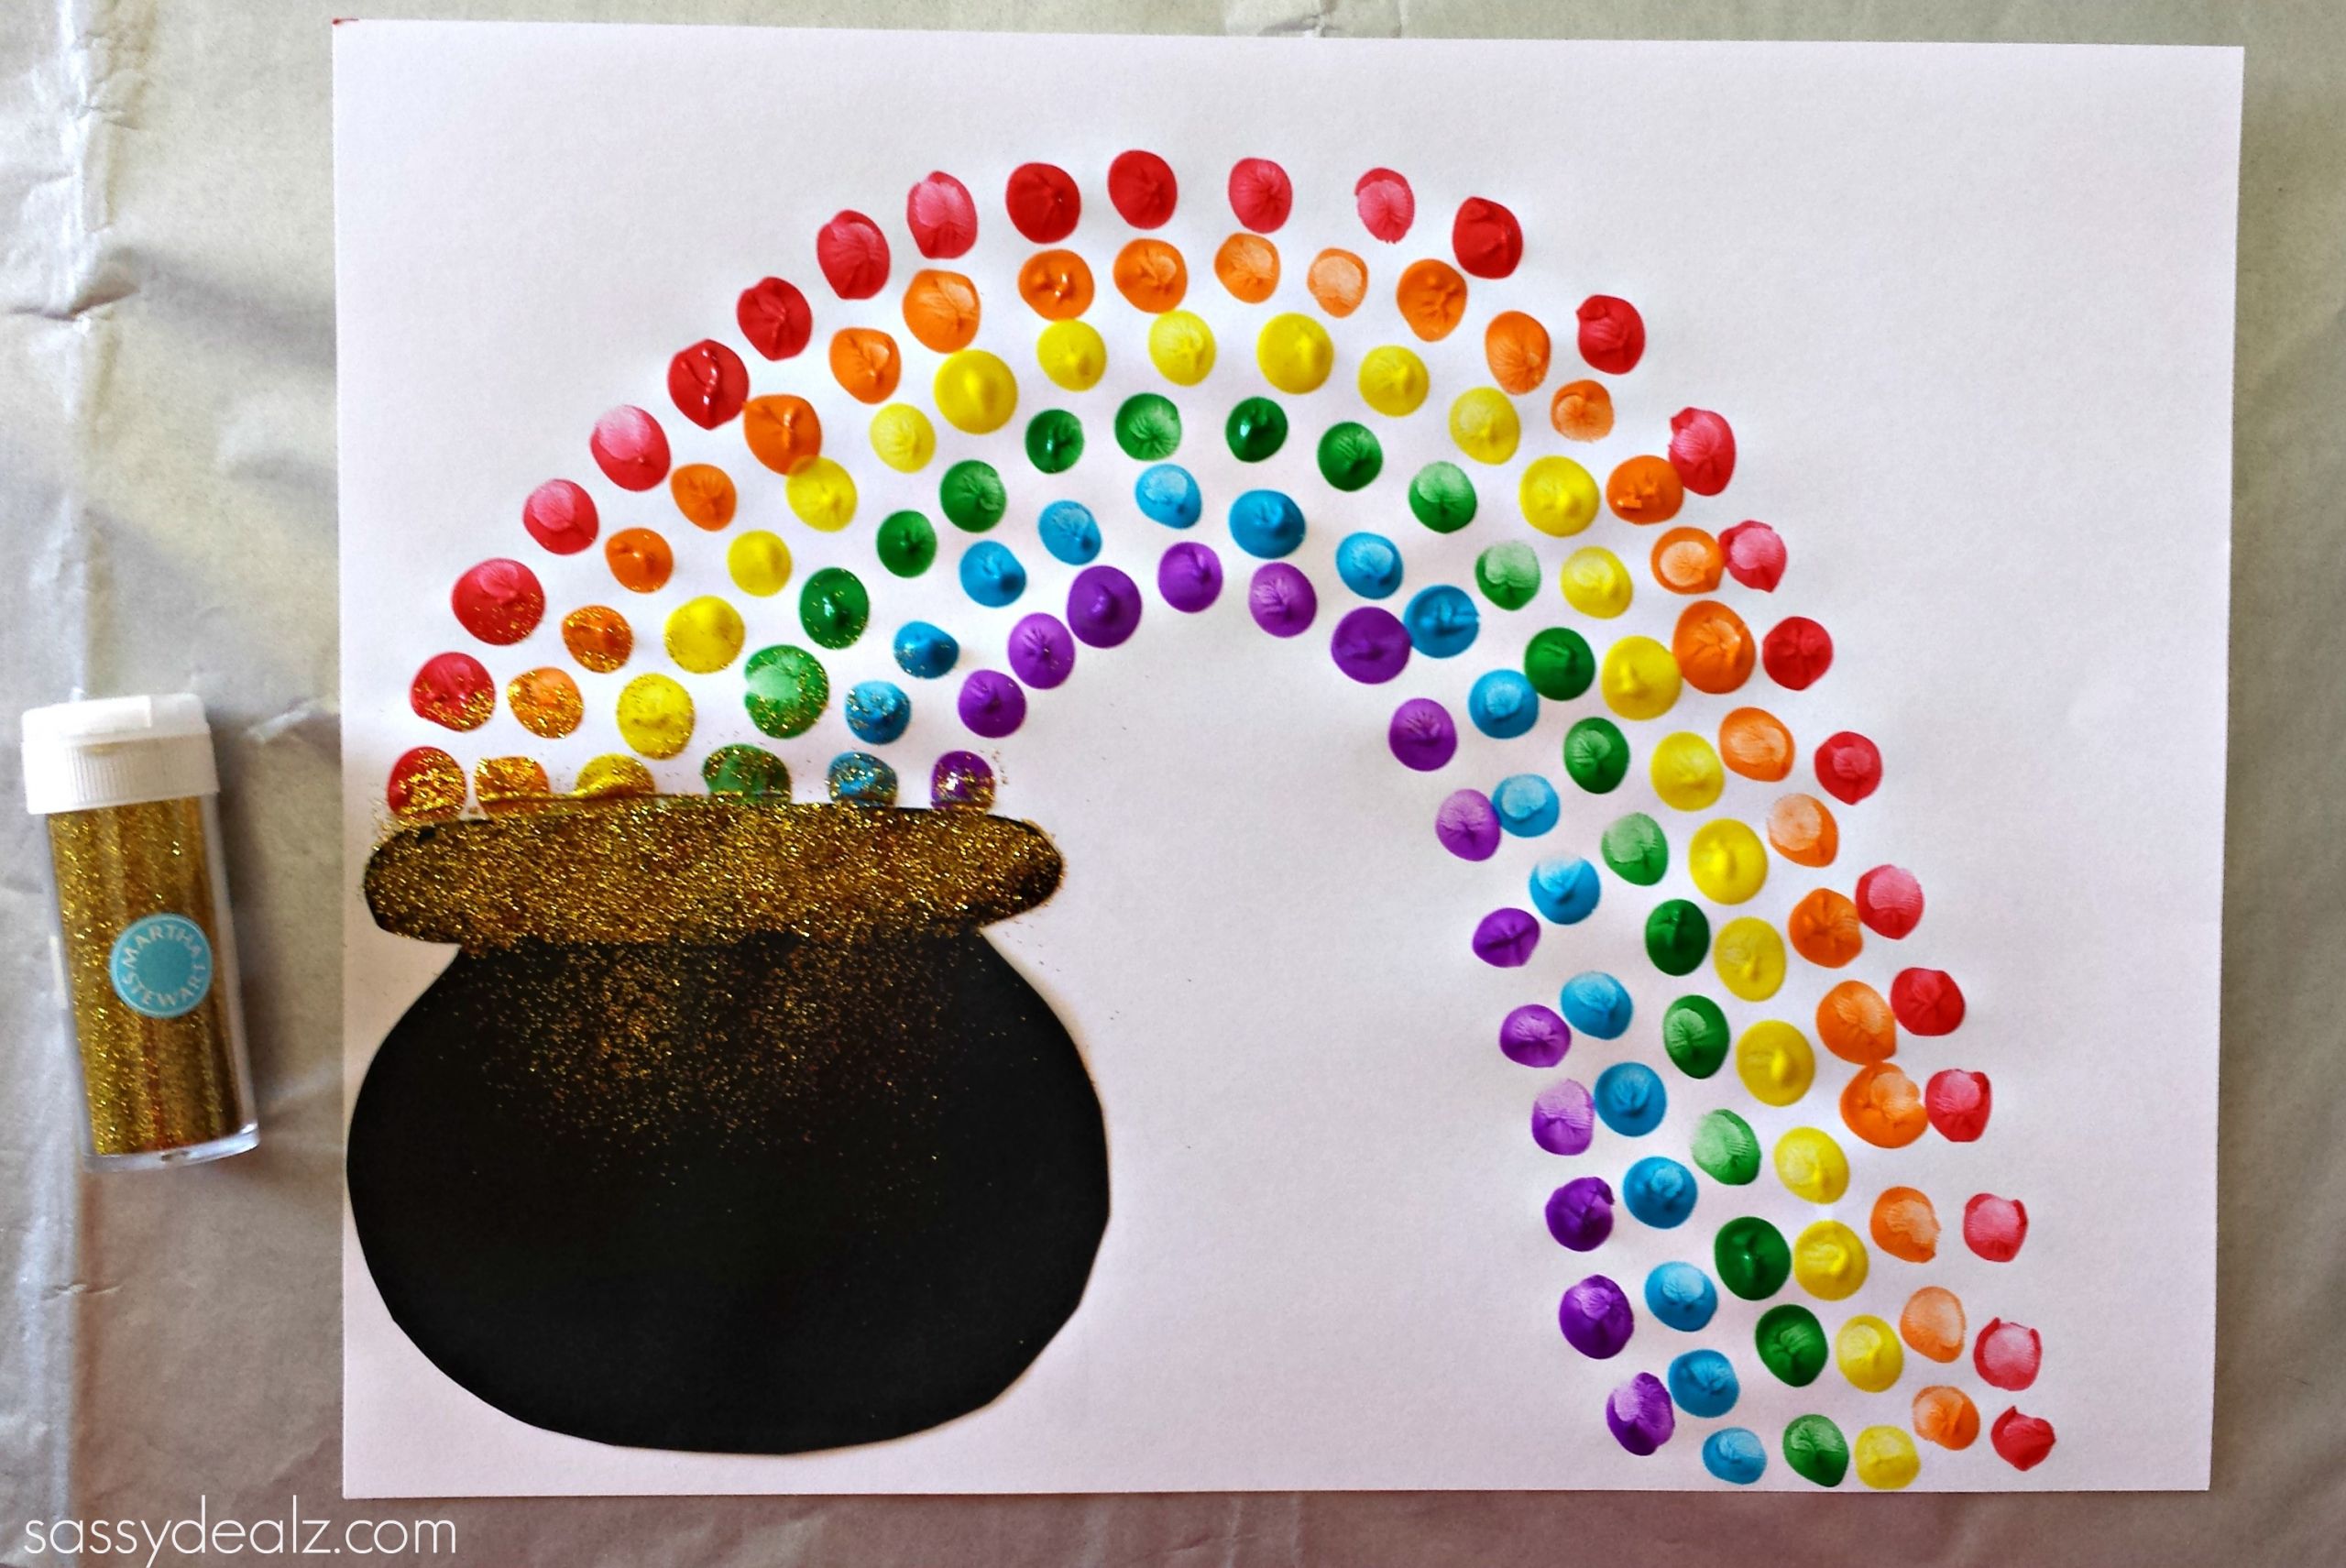 Saint Patrick Day Crafts
 Fingerprint Rainbow Pot of Gold Craft For St Patrick s